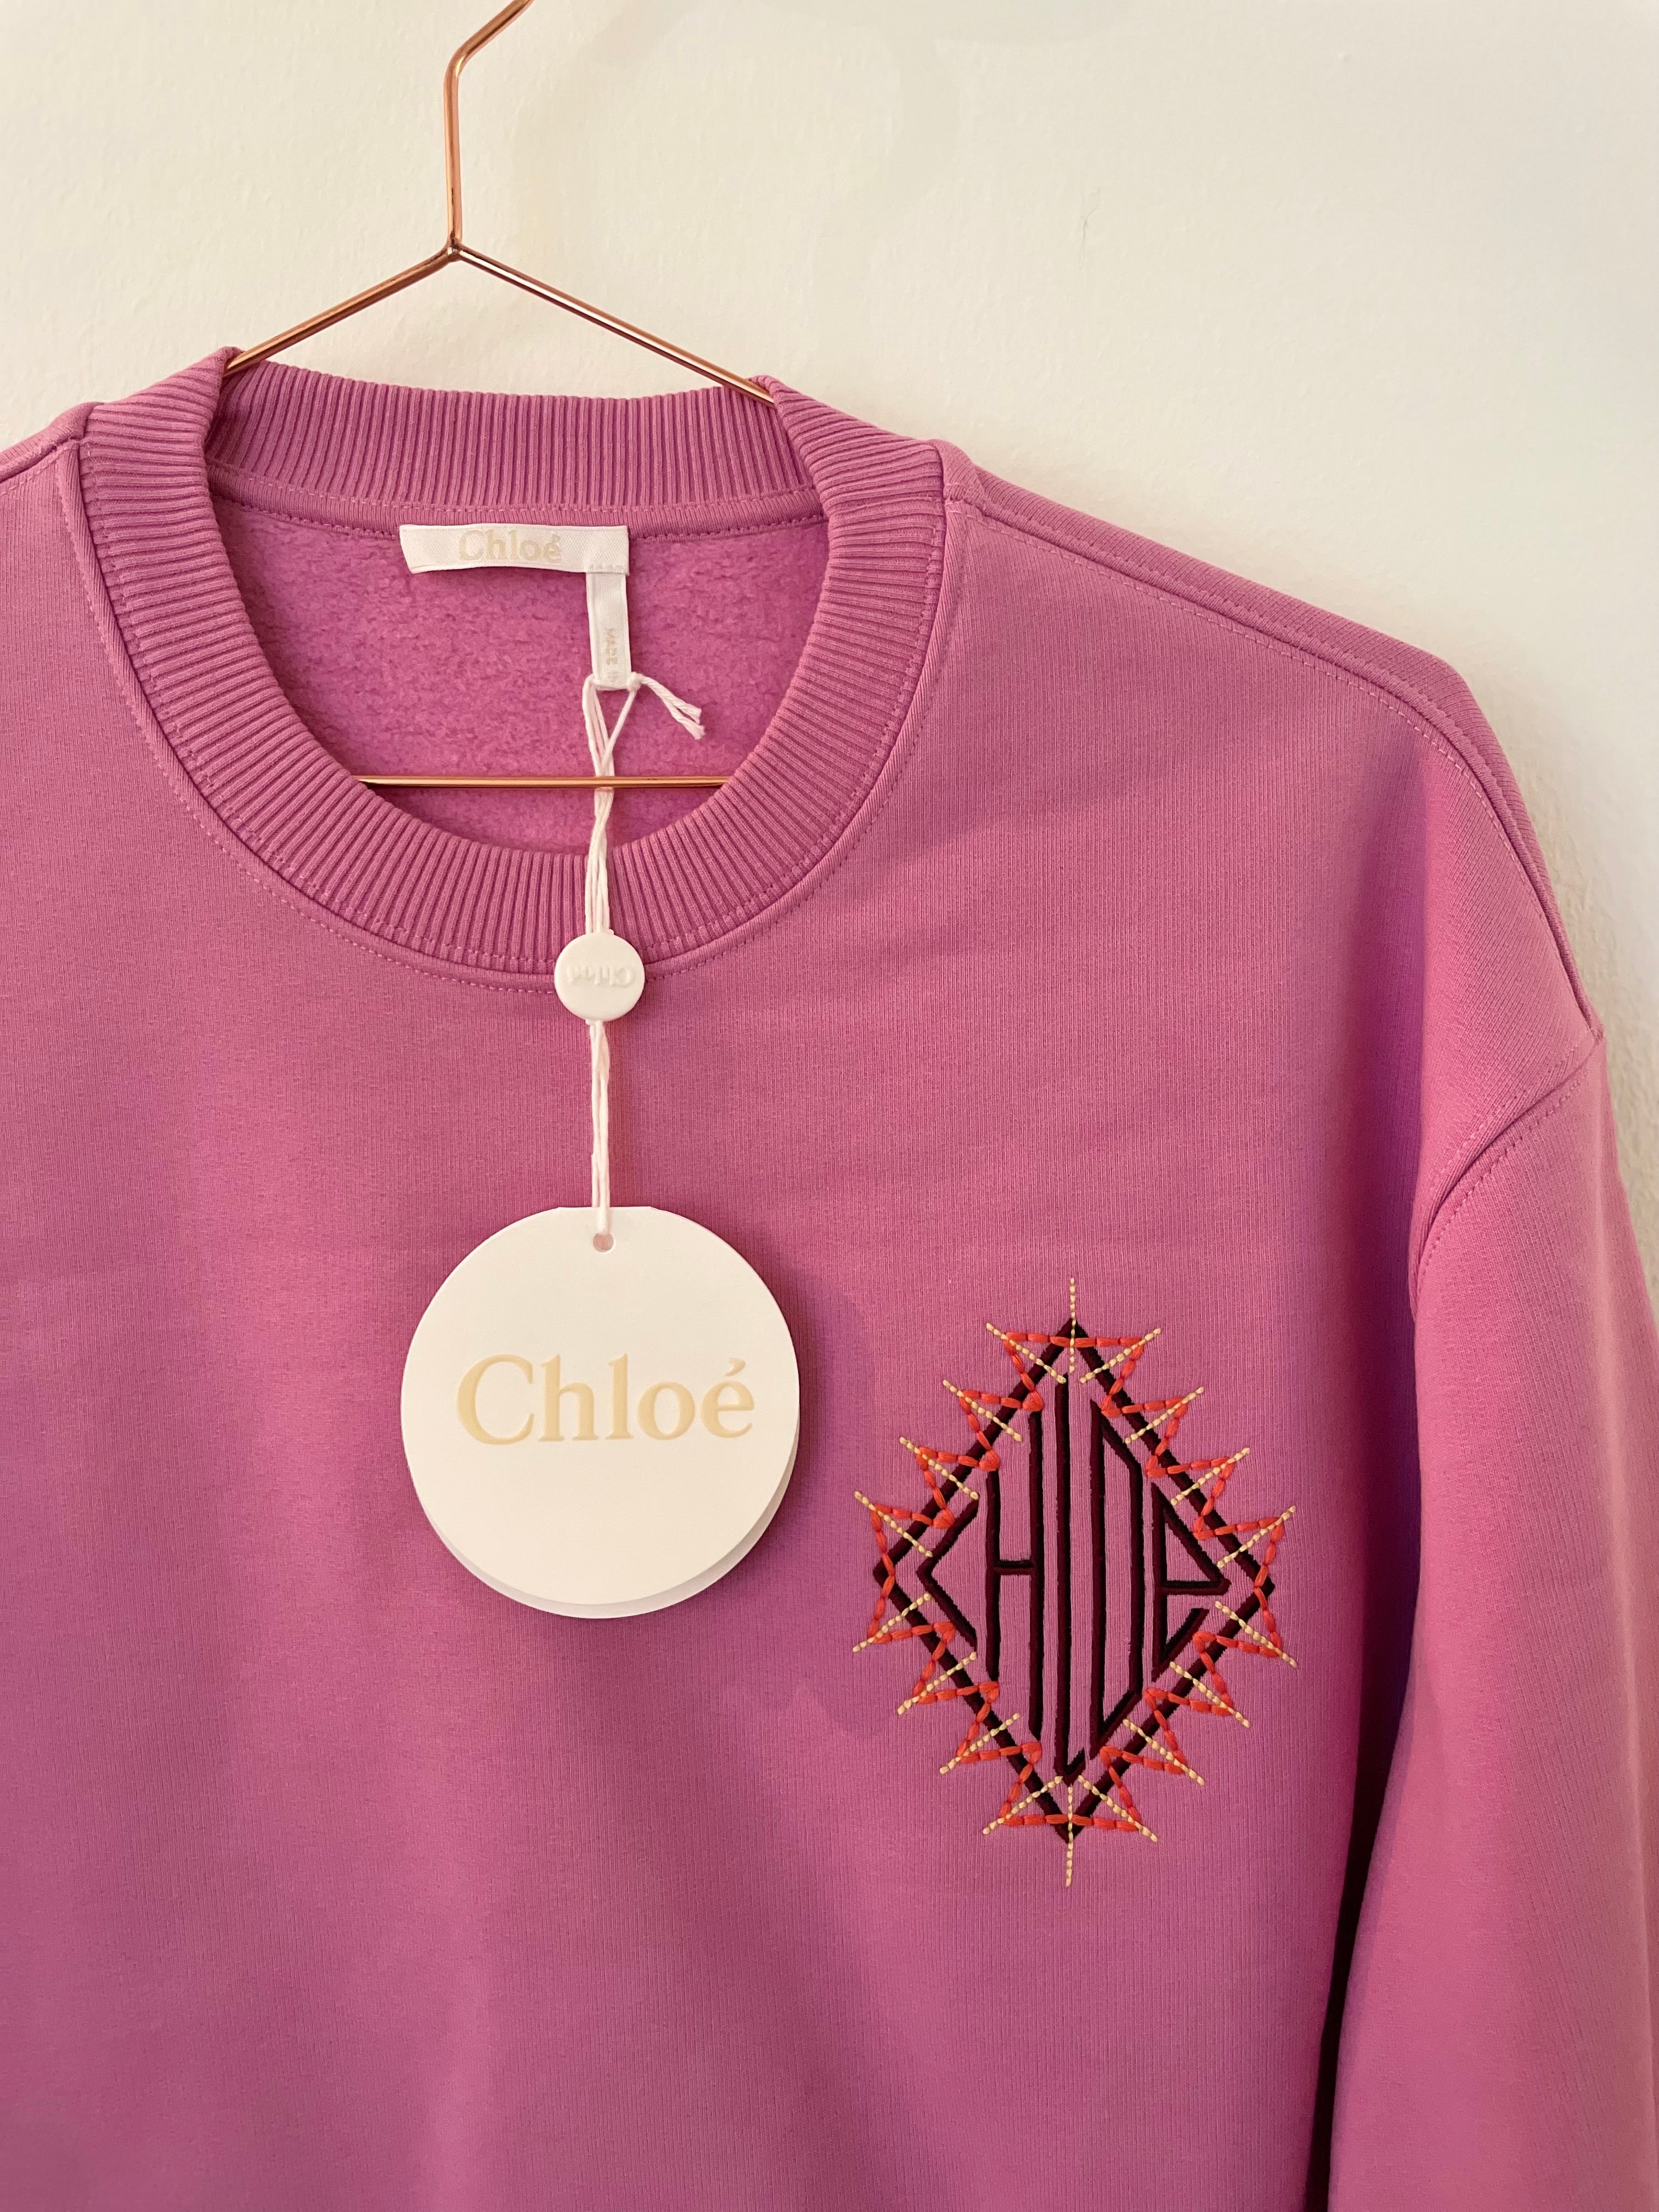 Pink sweater - CHLOÉ - S